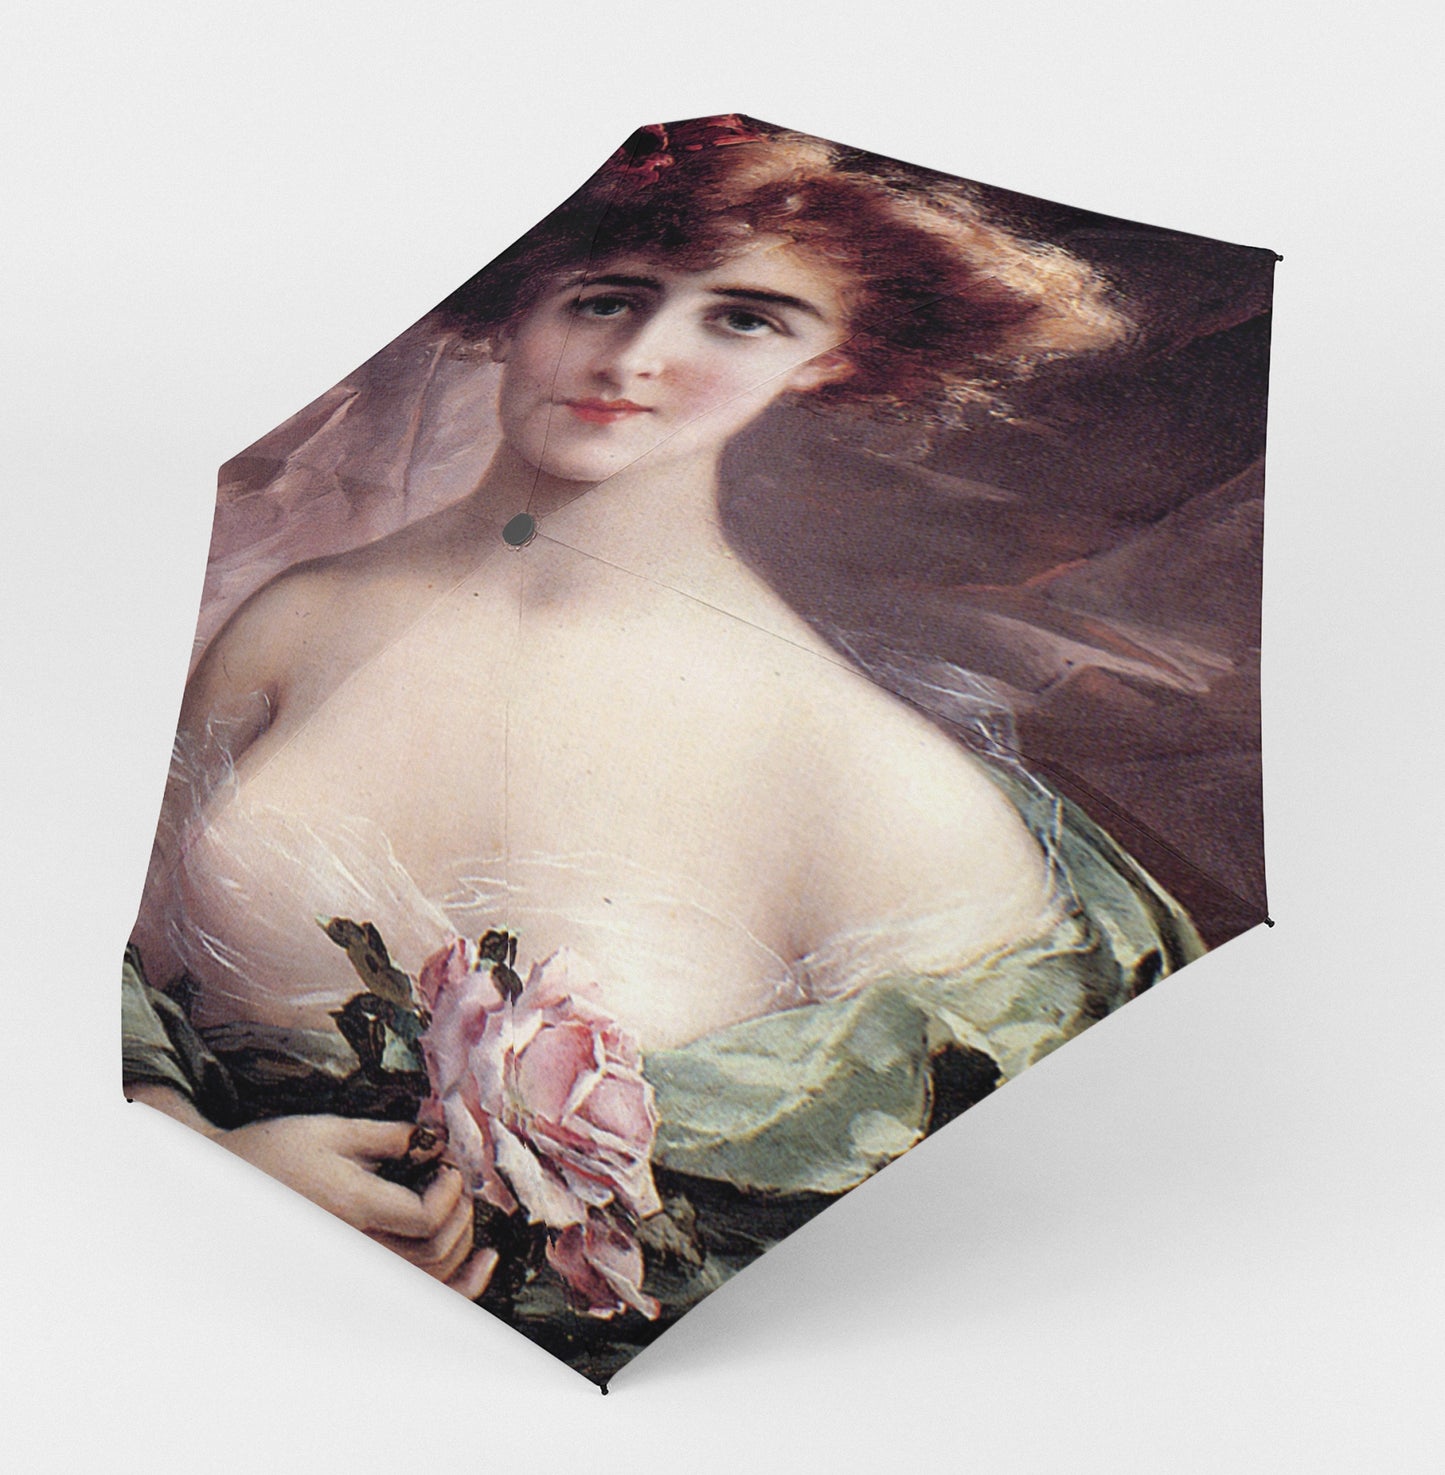 Victorian Lady Design UMBRELLA, The Pink Rose Model U05-C20